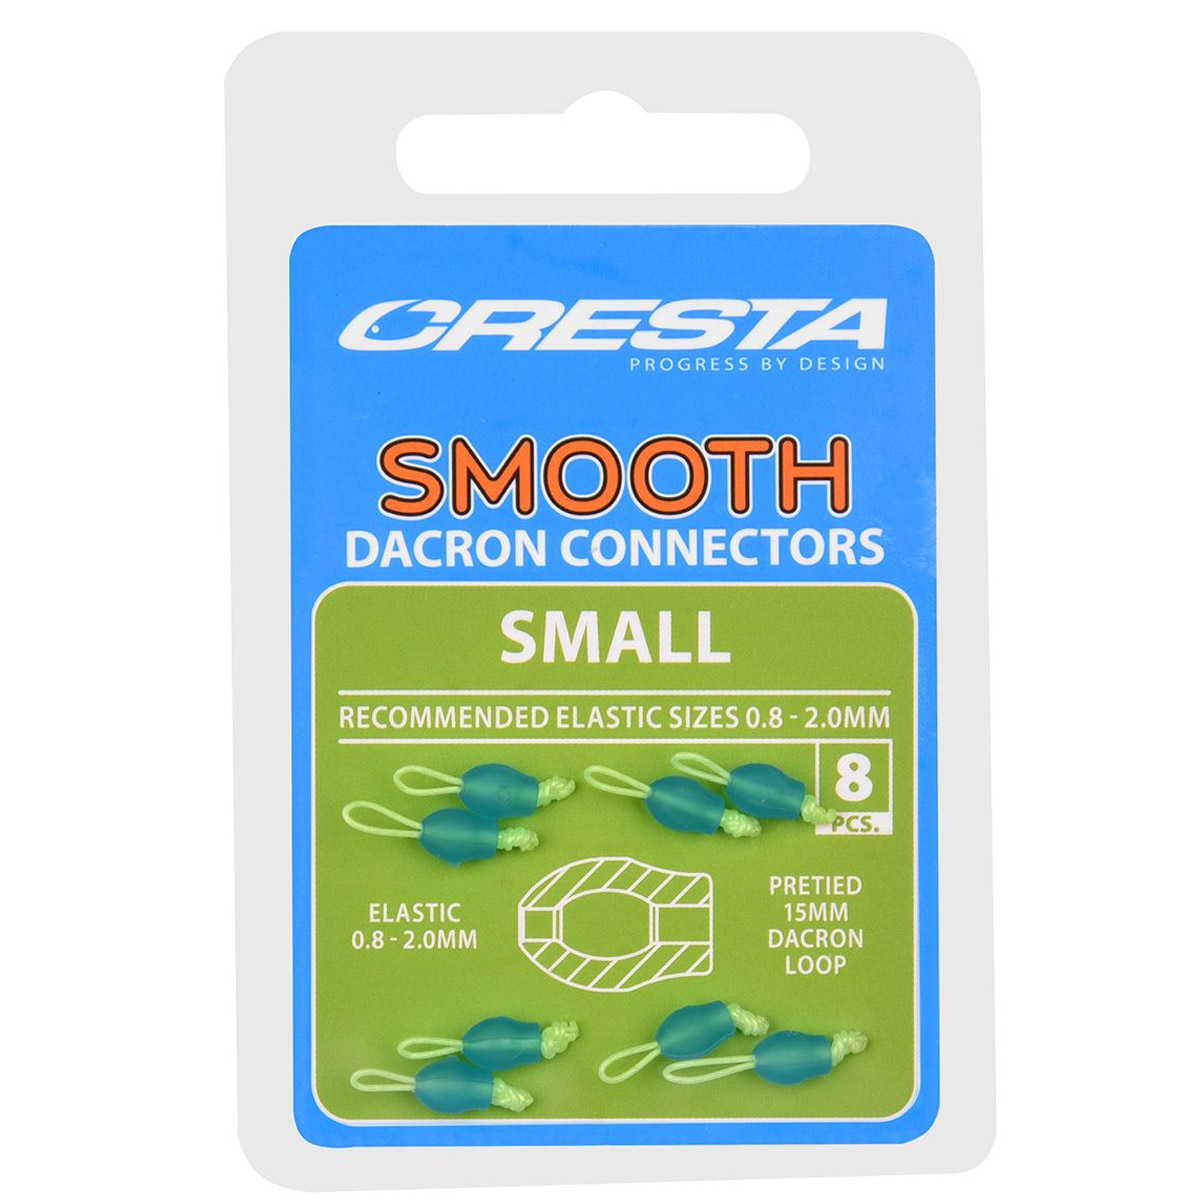 Cresta Smooth Dacron Connectors -  small